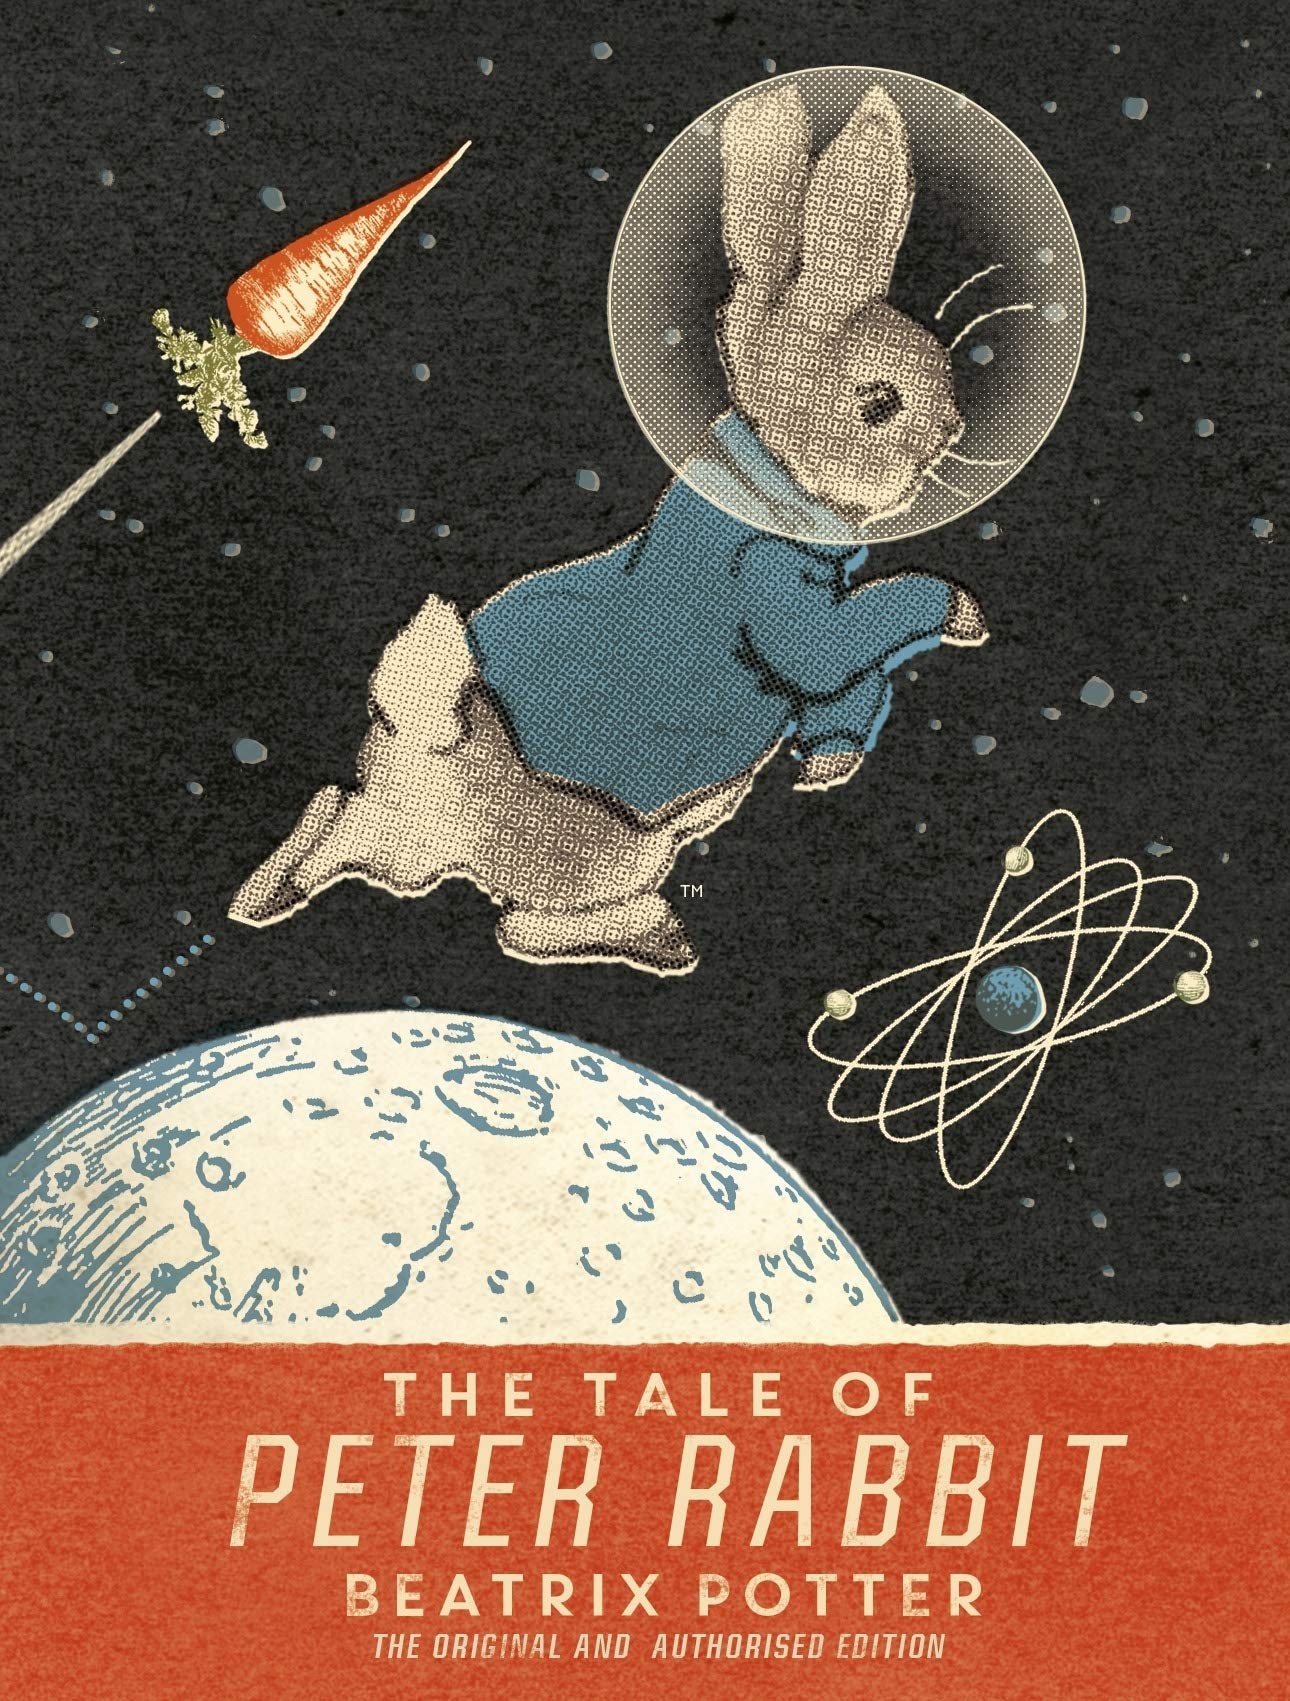 The Tale Of Peter Rabbit : Moon Landing Anniversary Edition